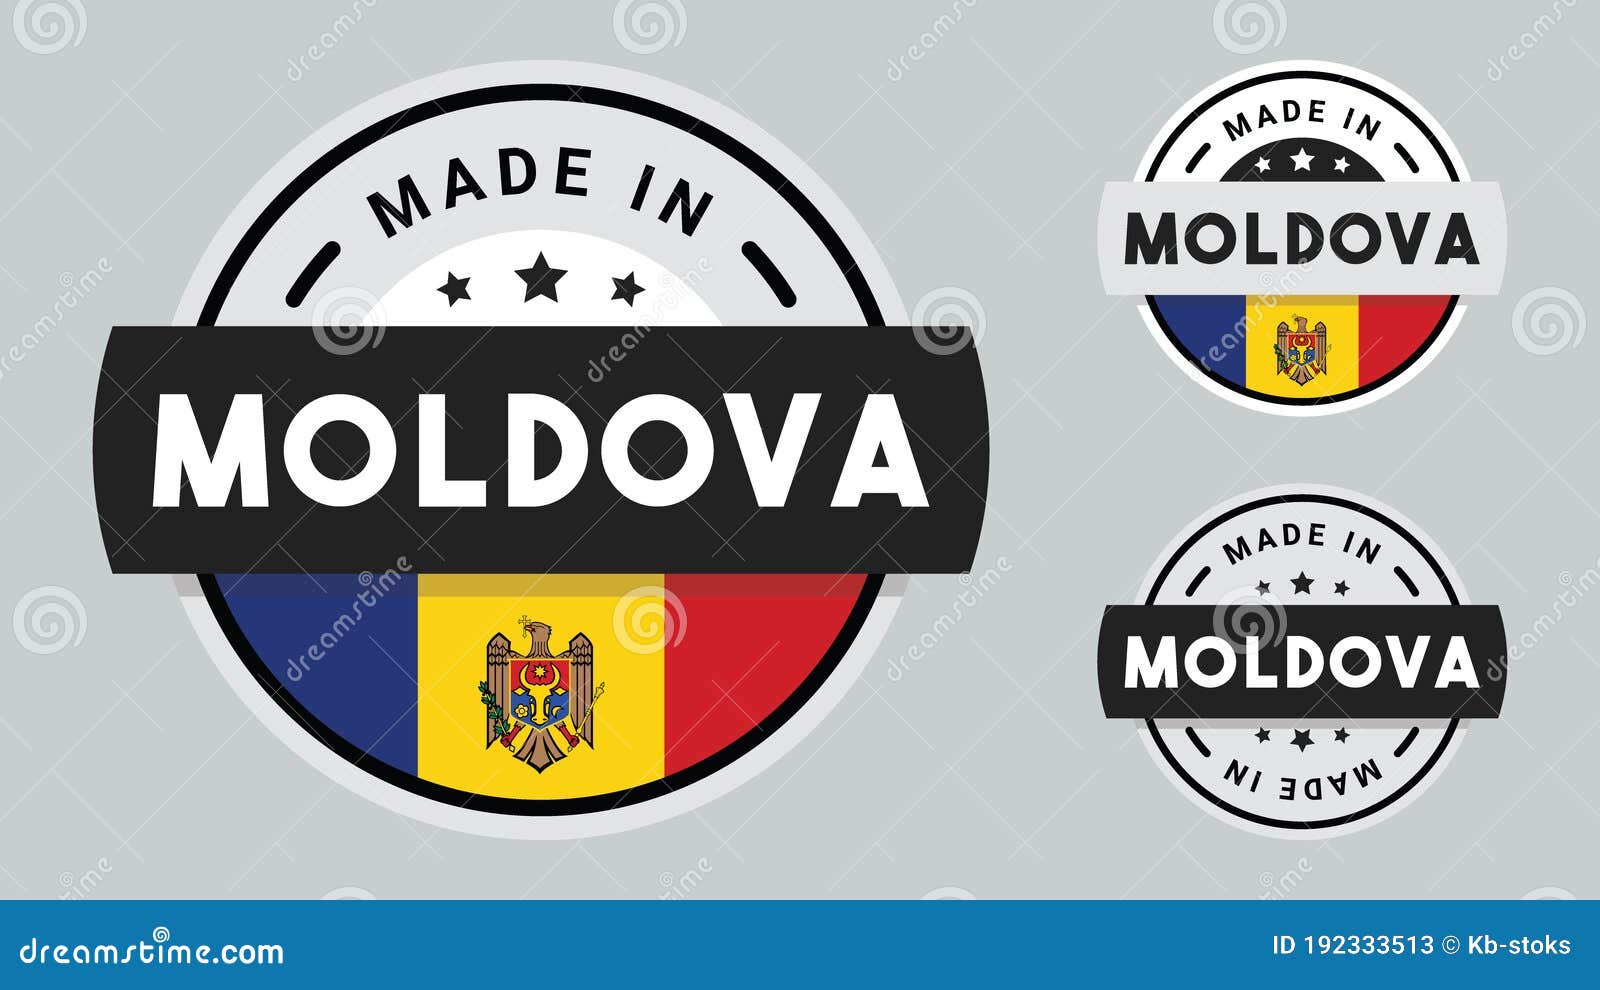 Moldova Sticker Vinyl 10 cm 4" Decal Stamp Made in Moldova Car Laptop Tablet